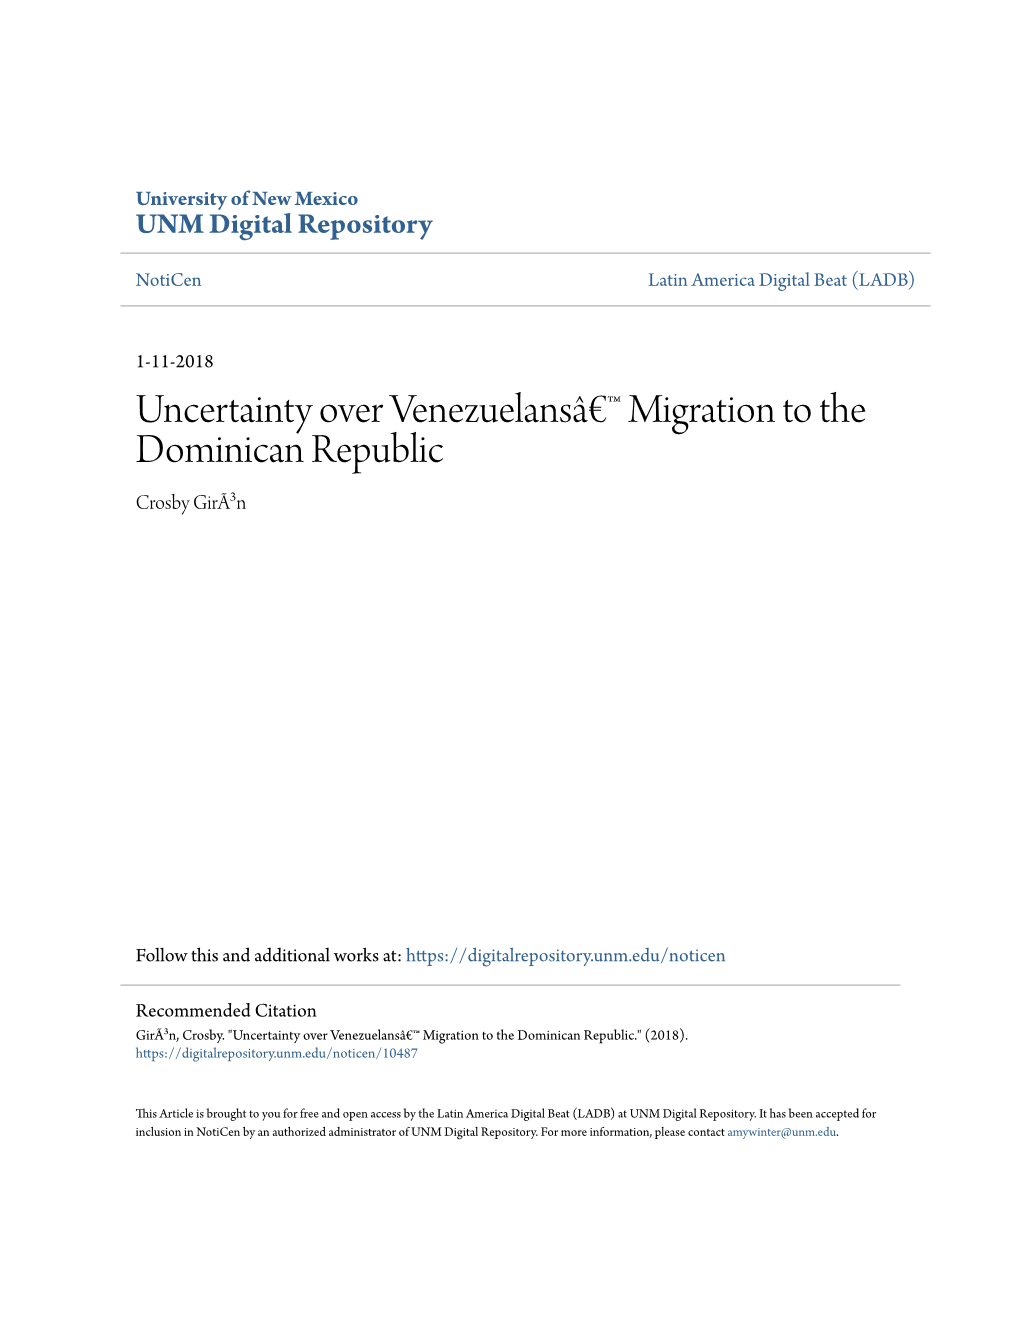 Uncertainty Over Venezuelansâ€™ Migration to the Dominican Republic Crosby Girã³n